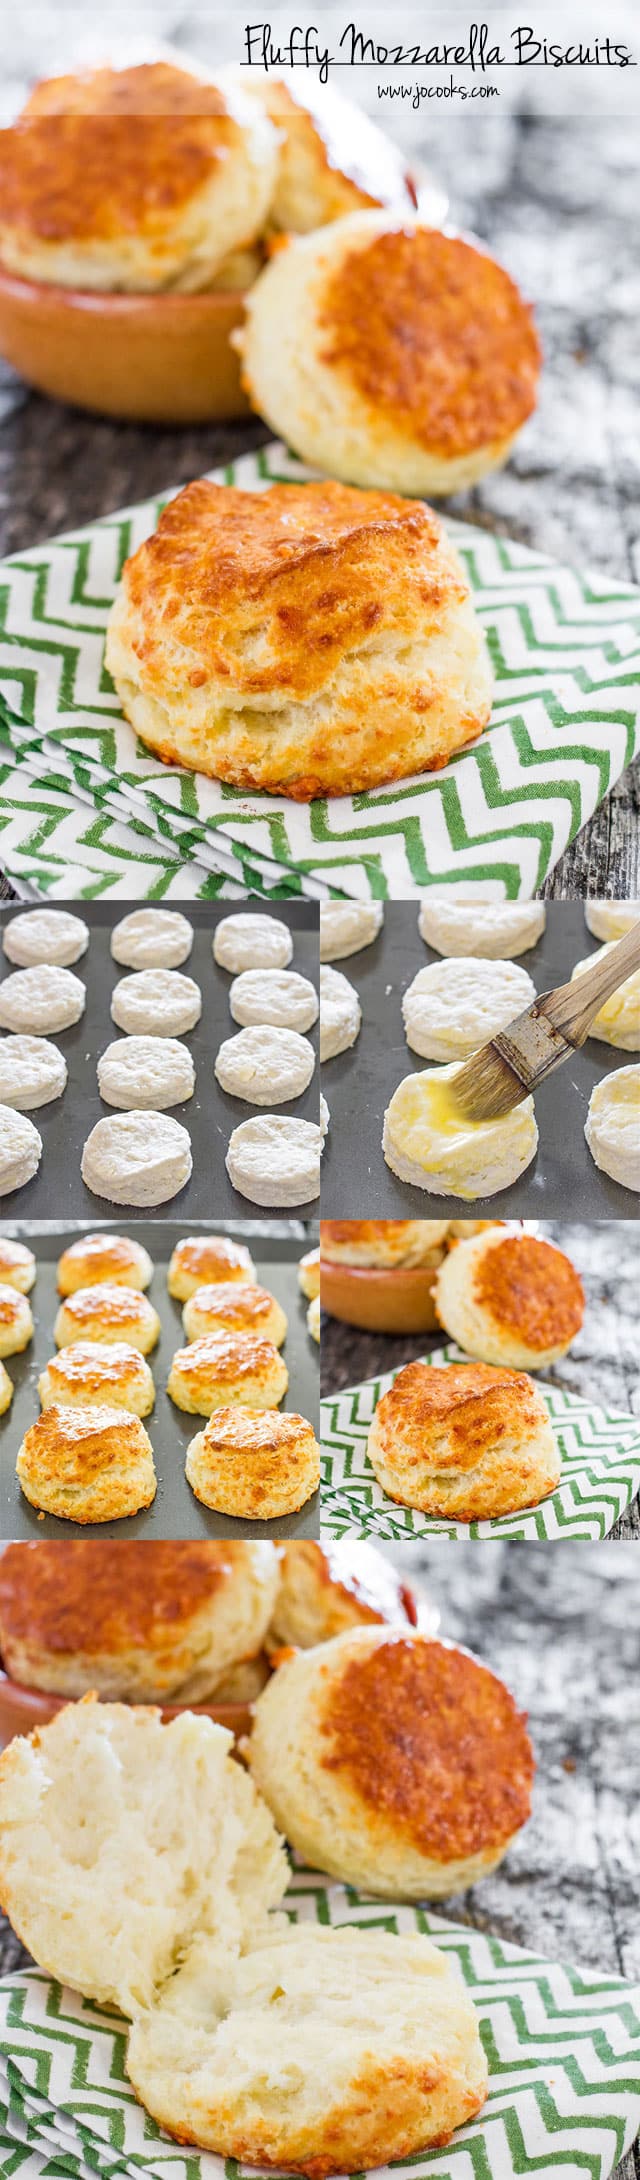 Fluffy Mozzarella Biscuits collage